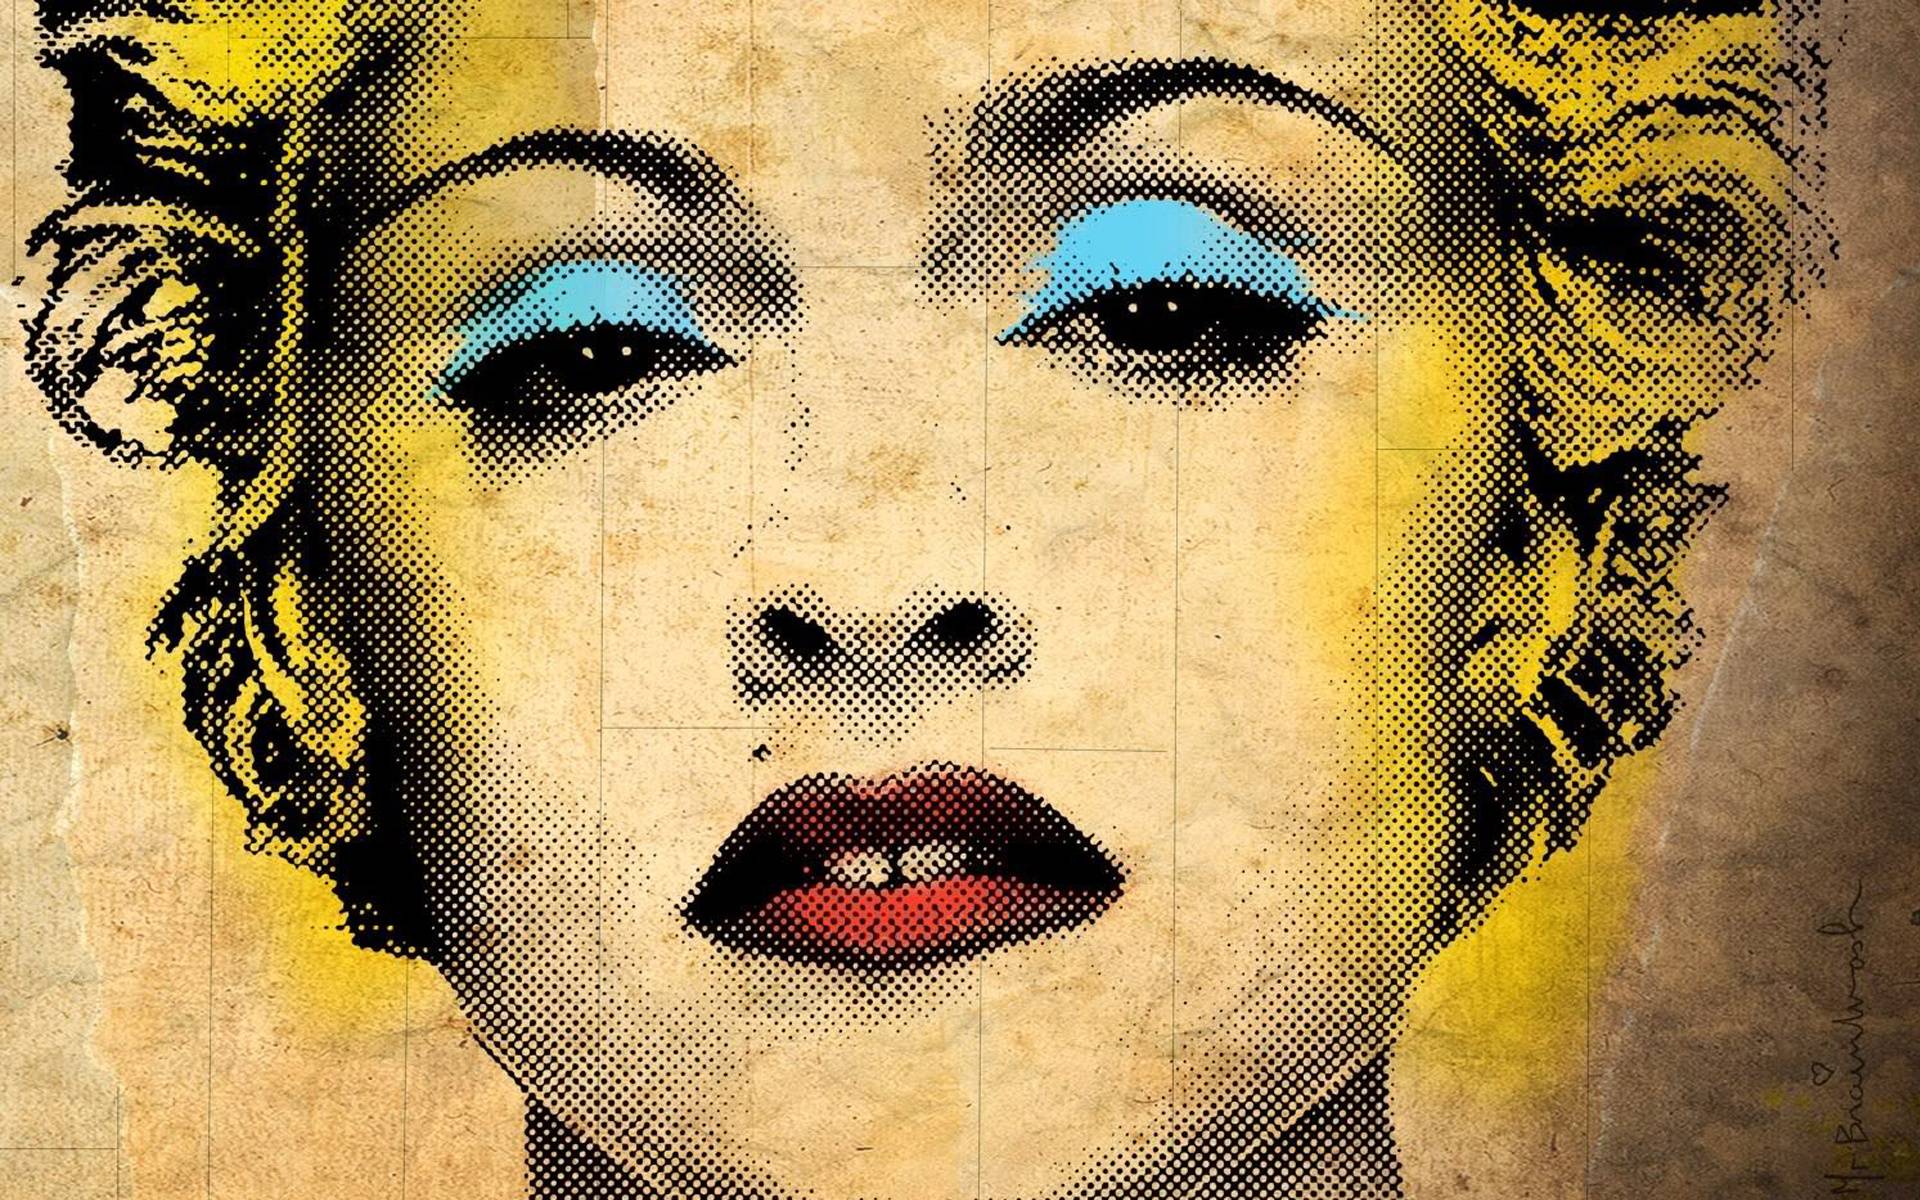 Madonna wallpaper